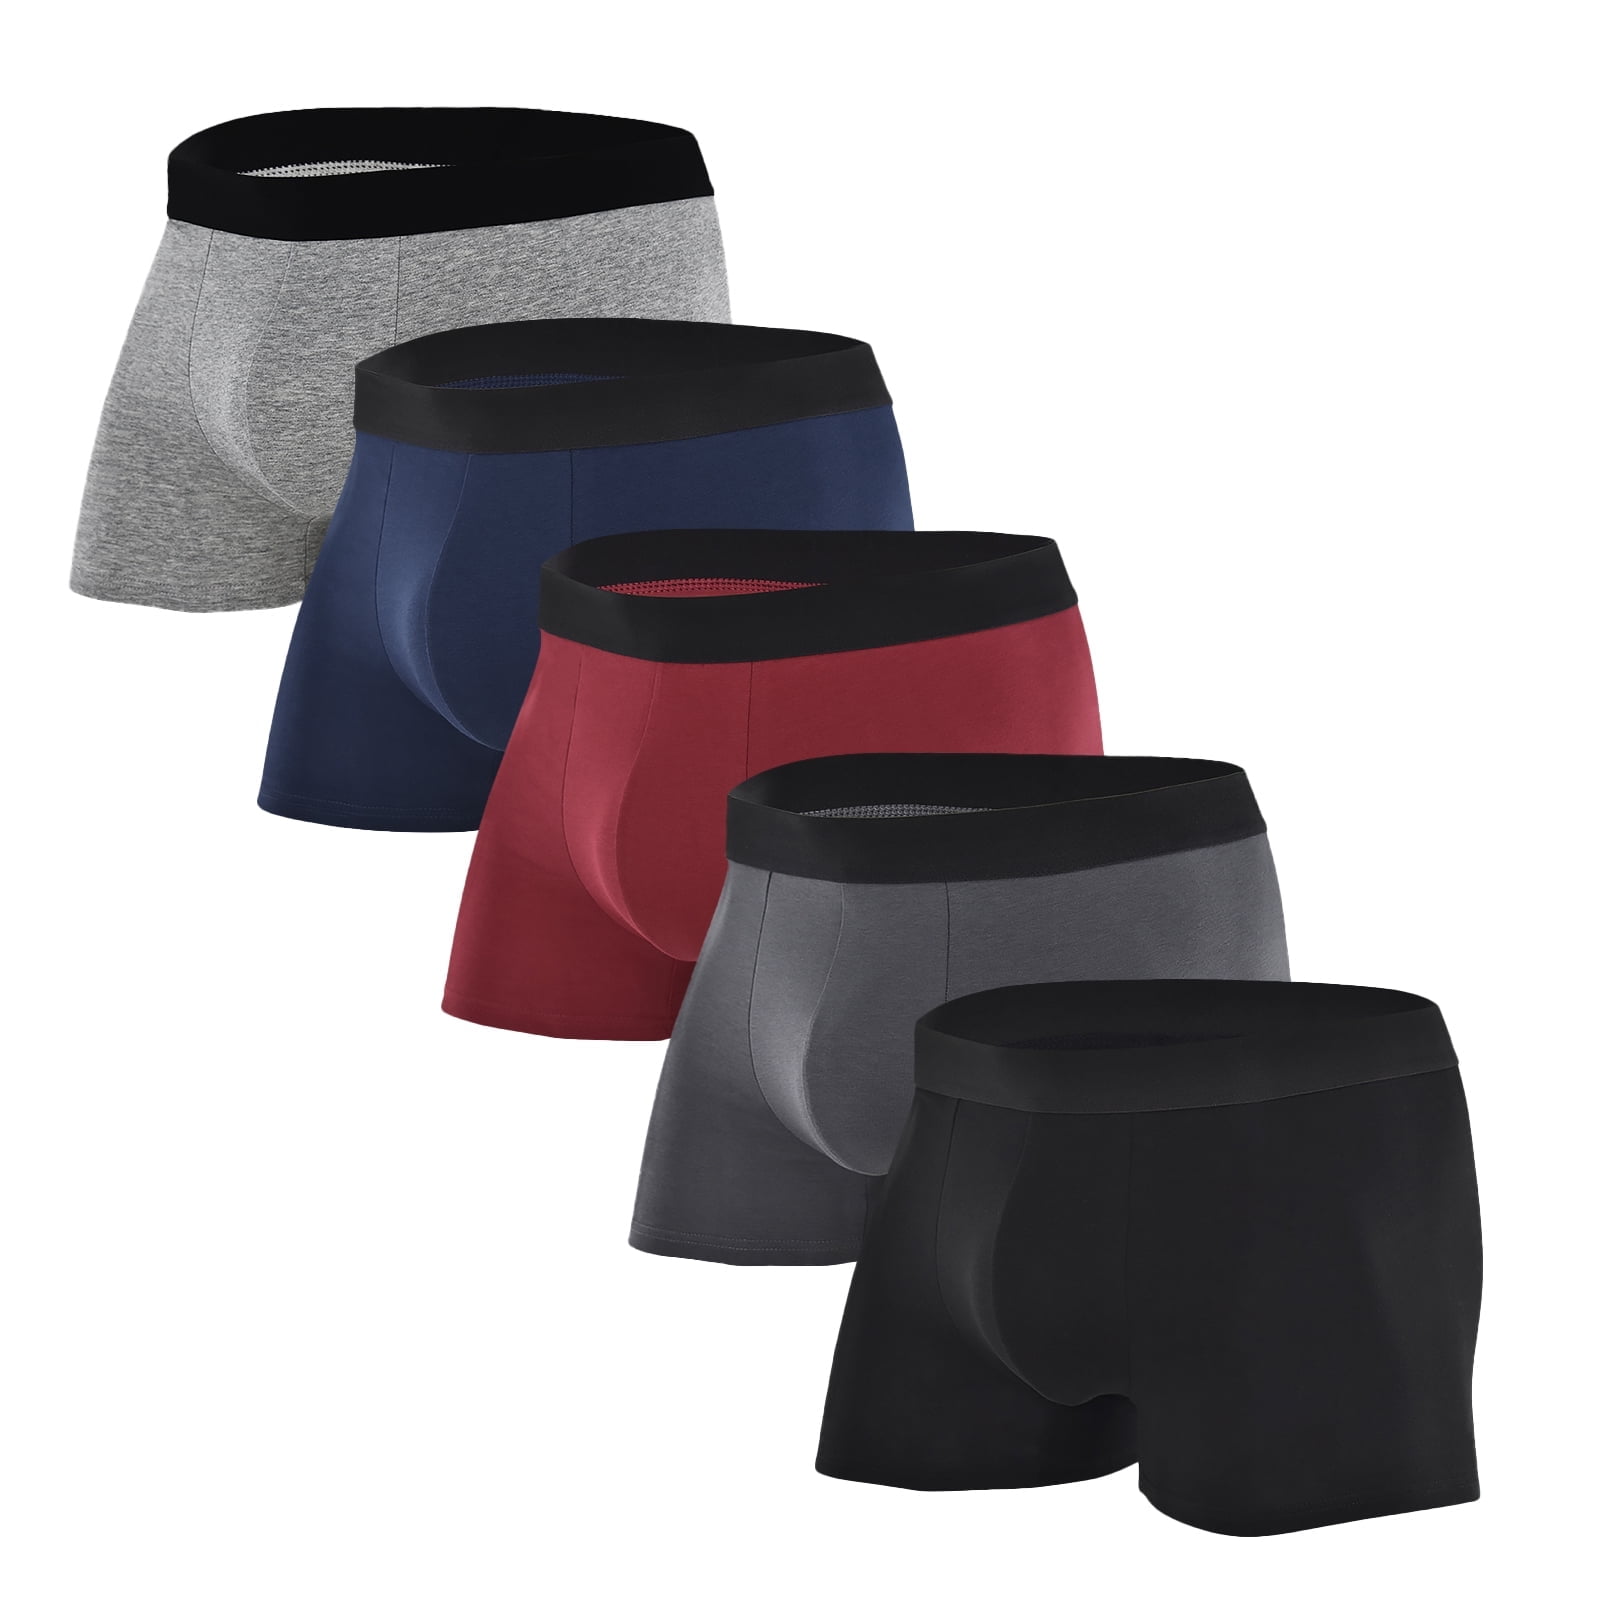 kpoplk Men's Boxers Cotton Boxer Briefs for Men Men's Underwear